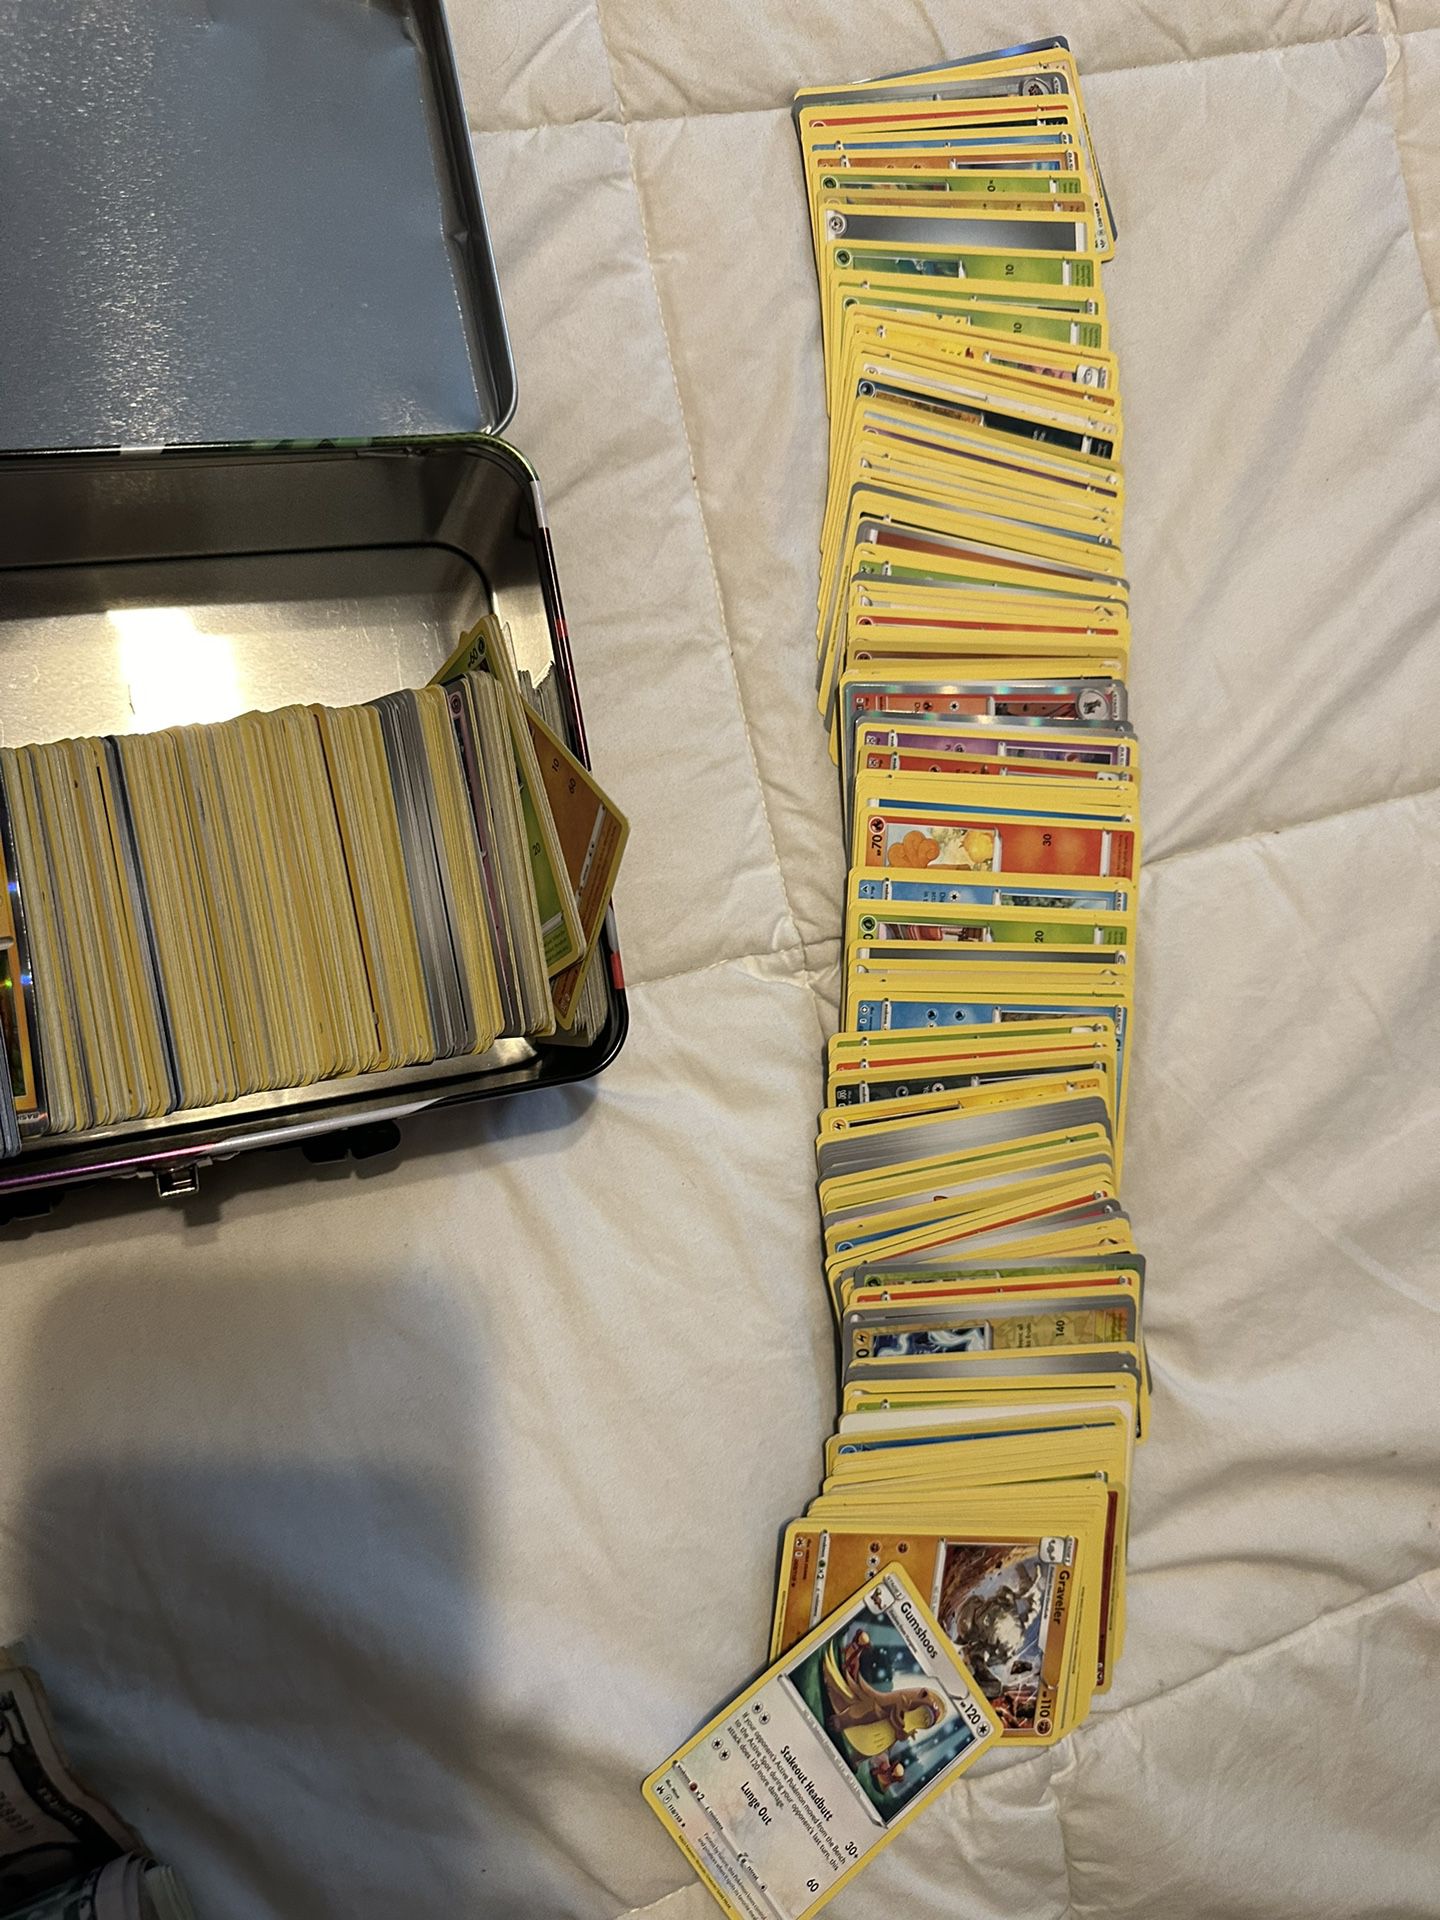 500 Pokemon Cards